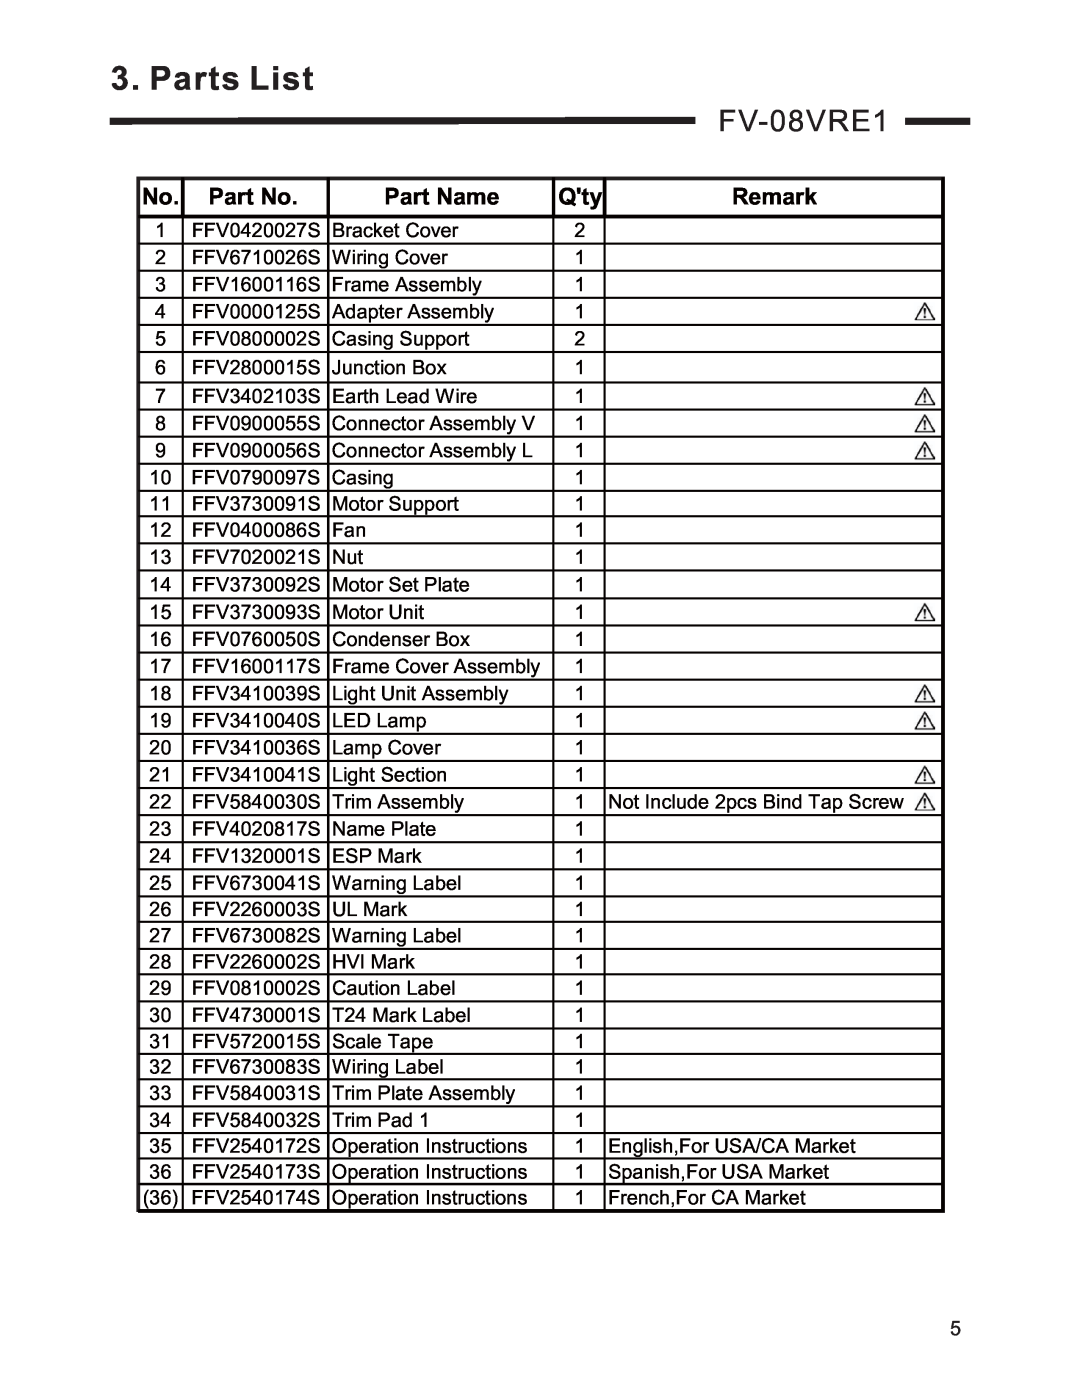 Panasonic FV-08VRE1 service manual Parts List, Part Name, Remark 